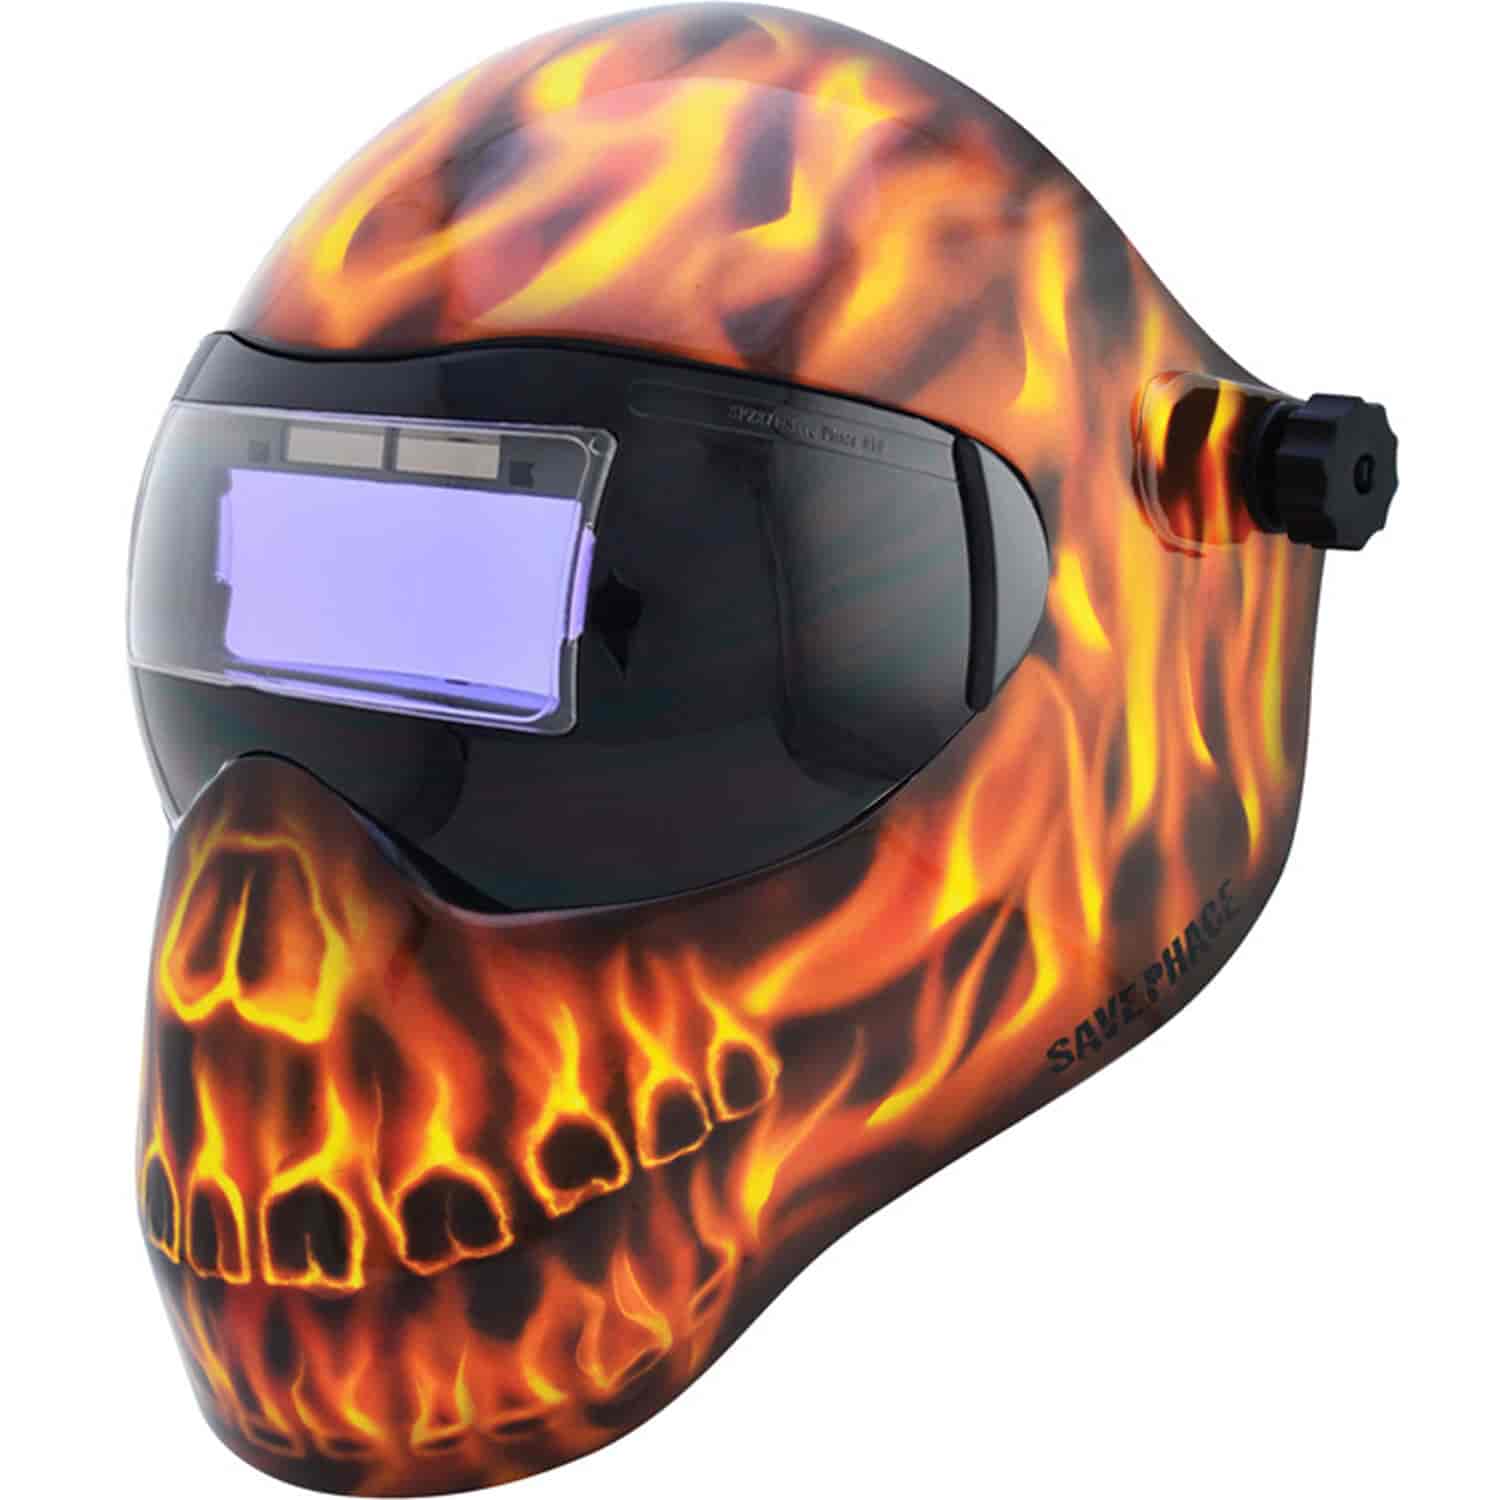 EFP I Series Welding Helmet with Custom Hells Angel Graphics